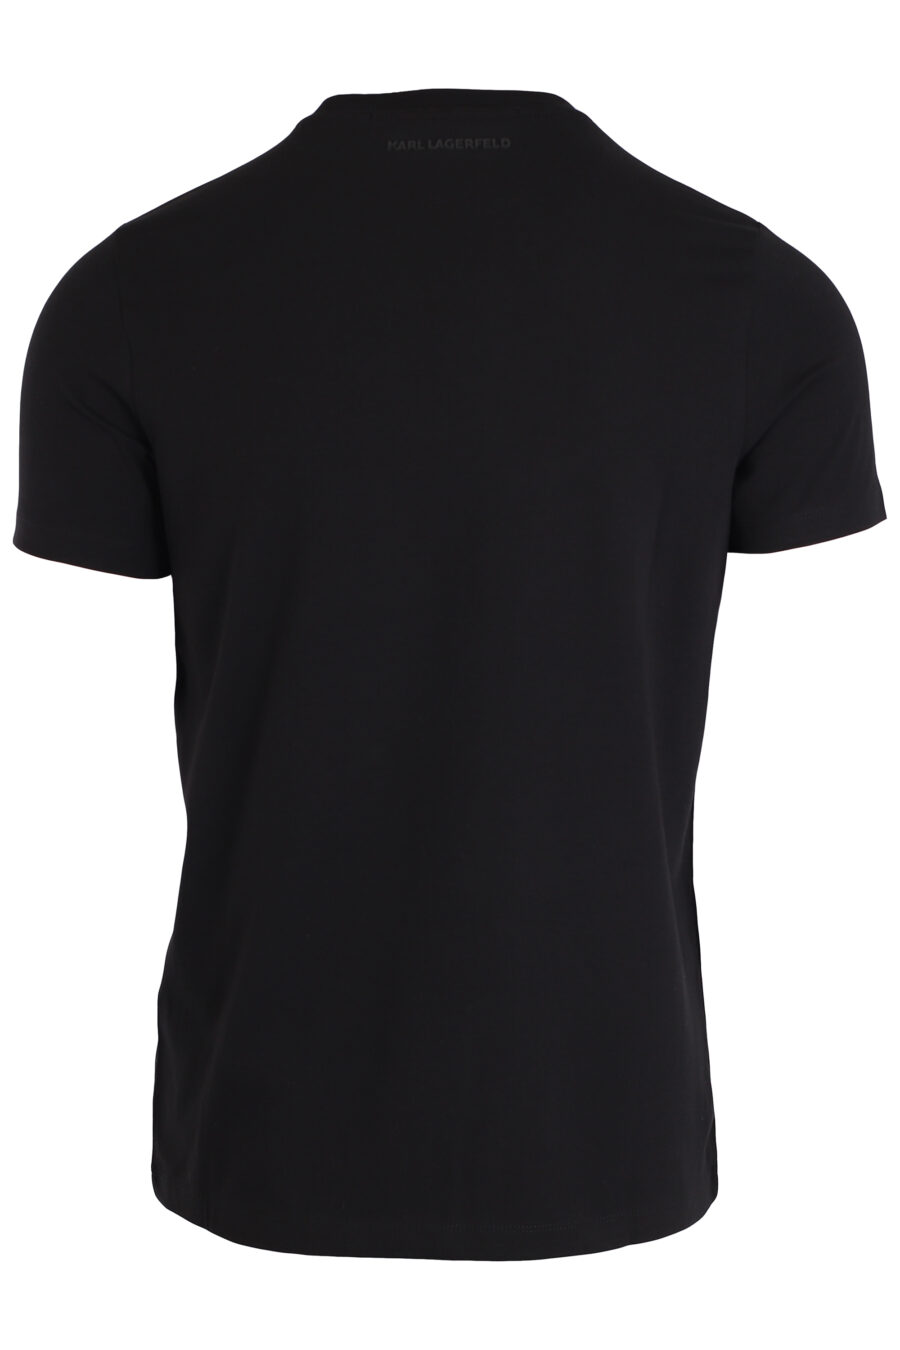 T-shirt noir avec logo "ikonik" - IMG 3977